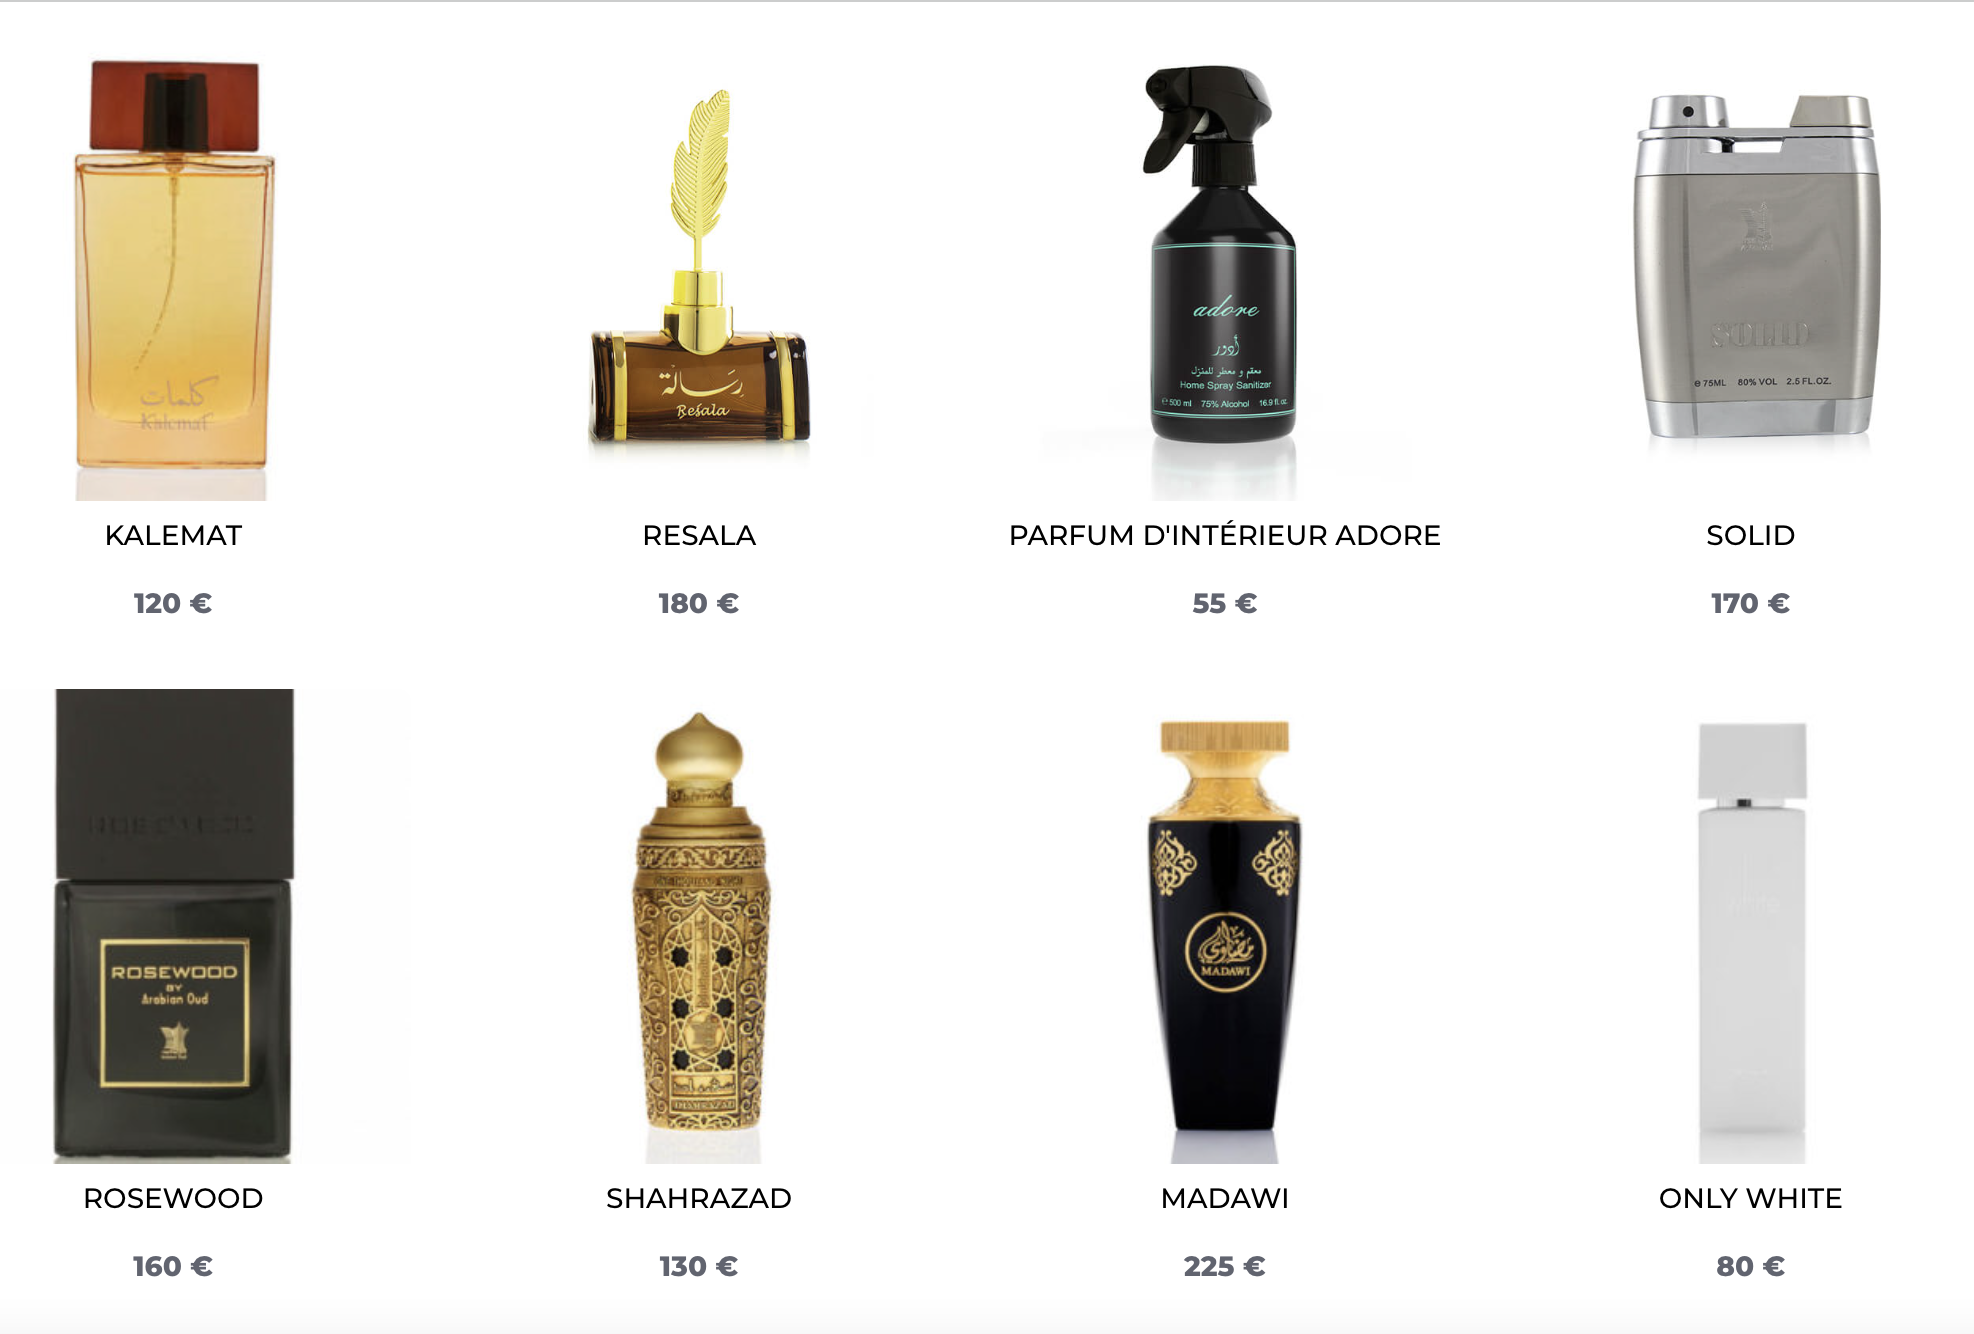 Where to buy Arabic perfumes?